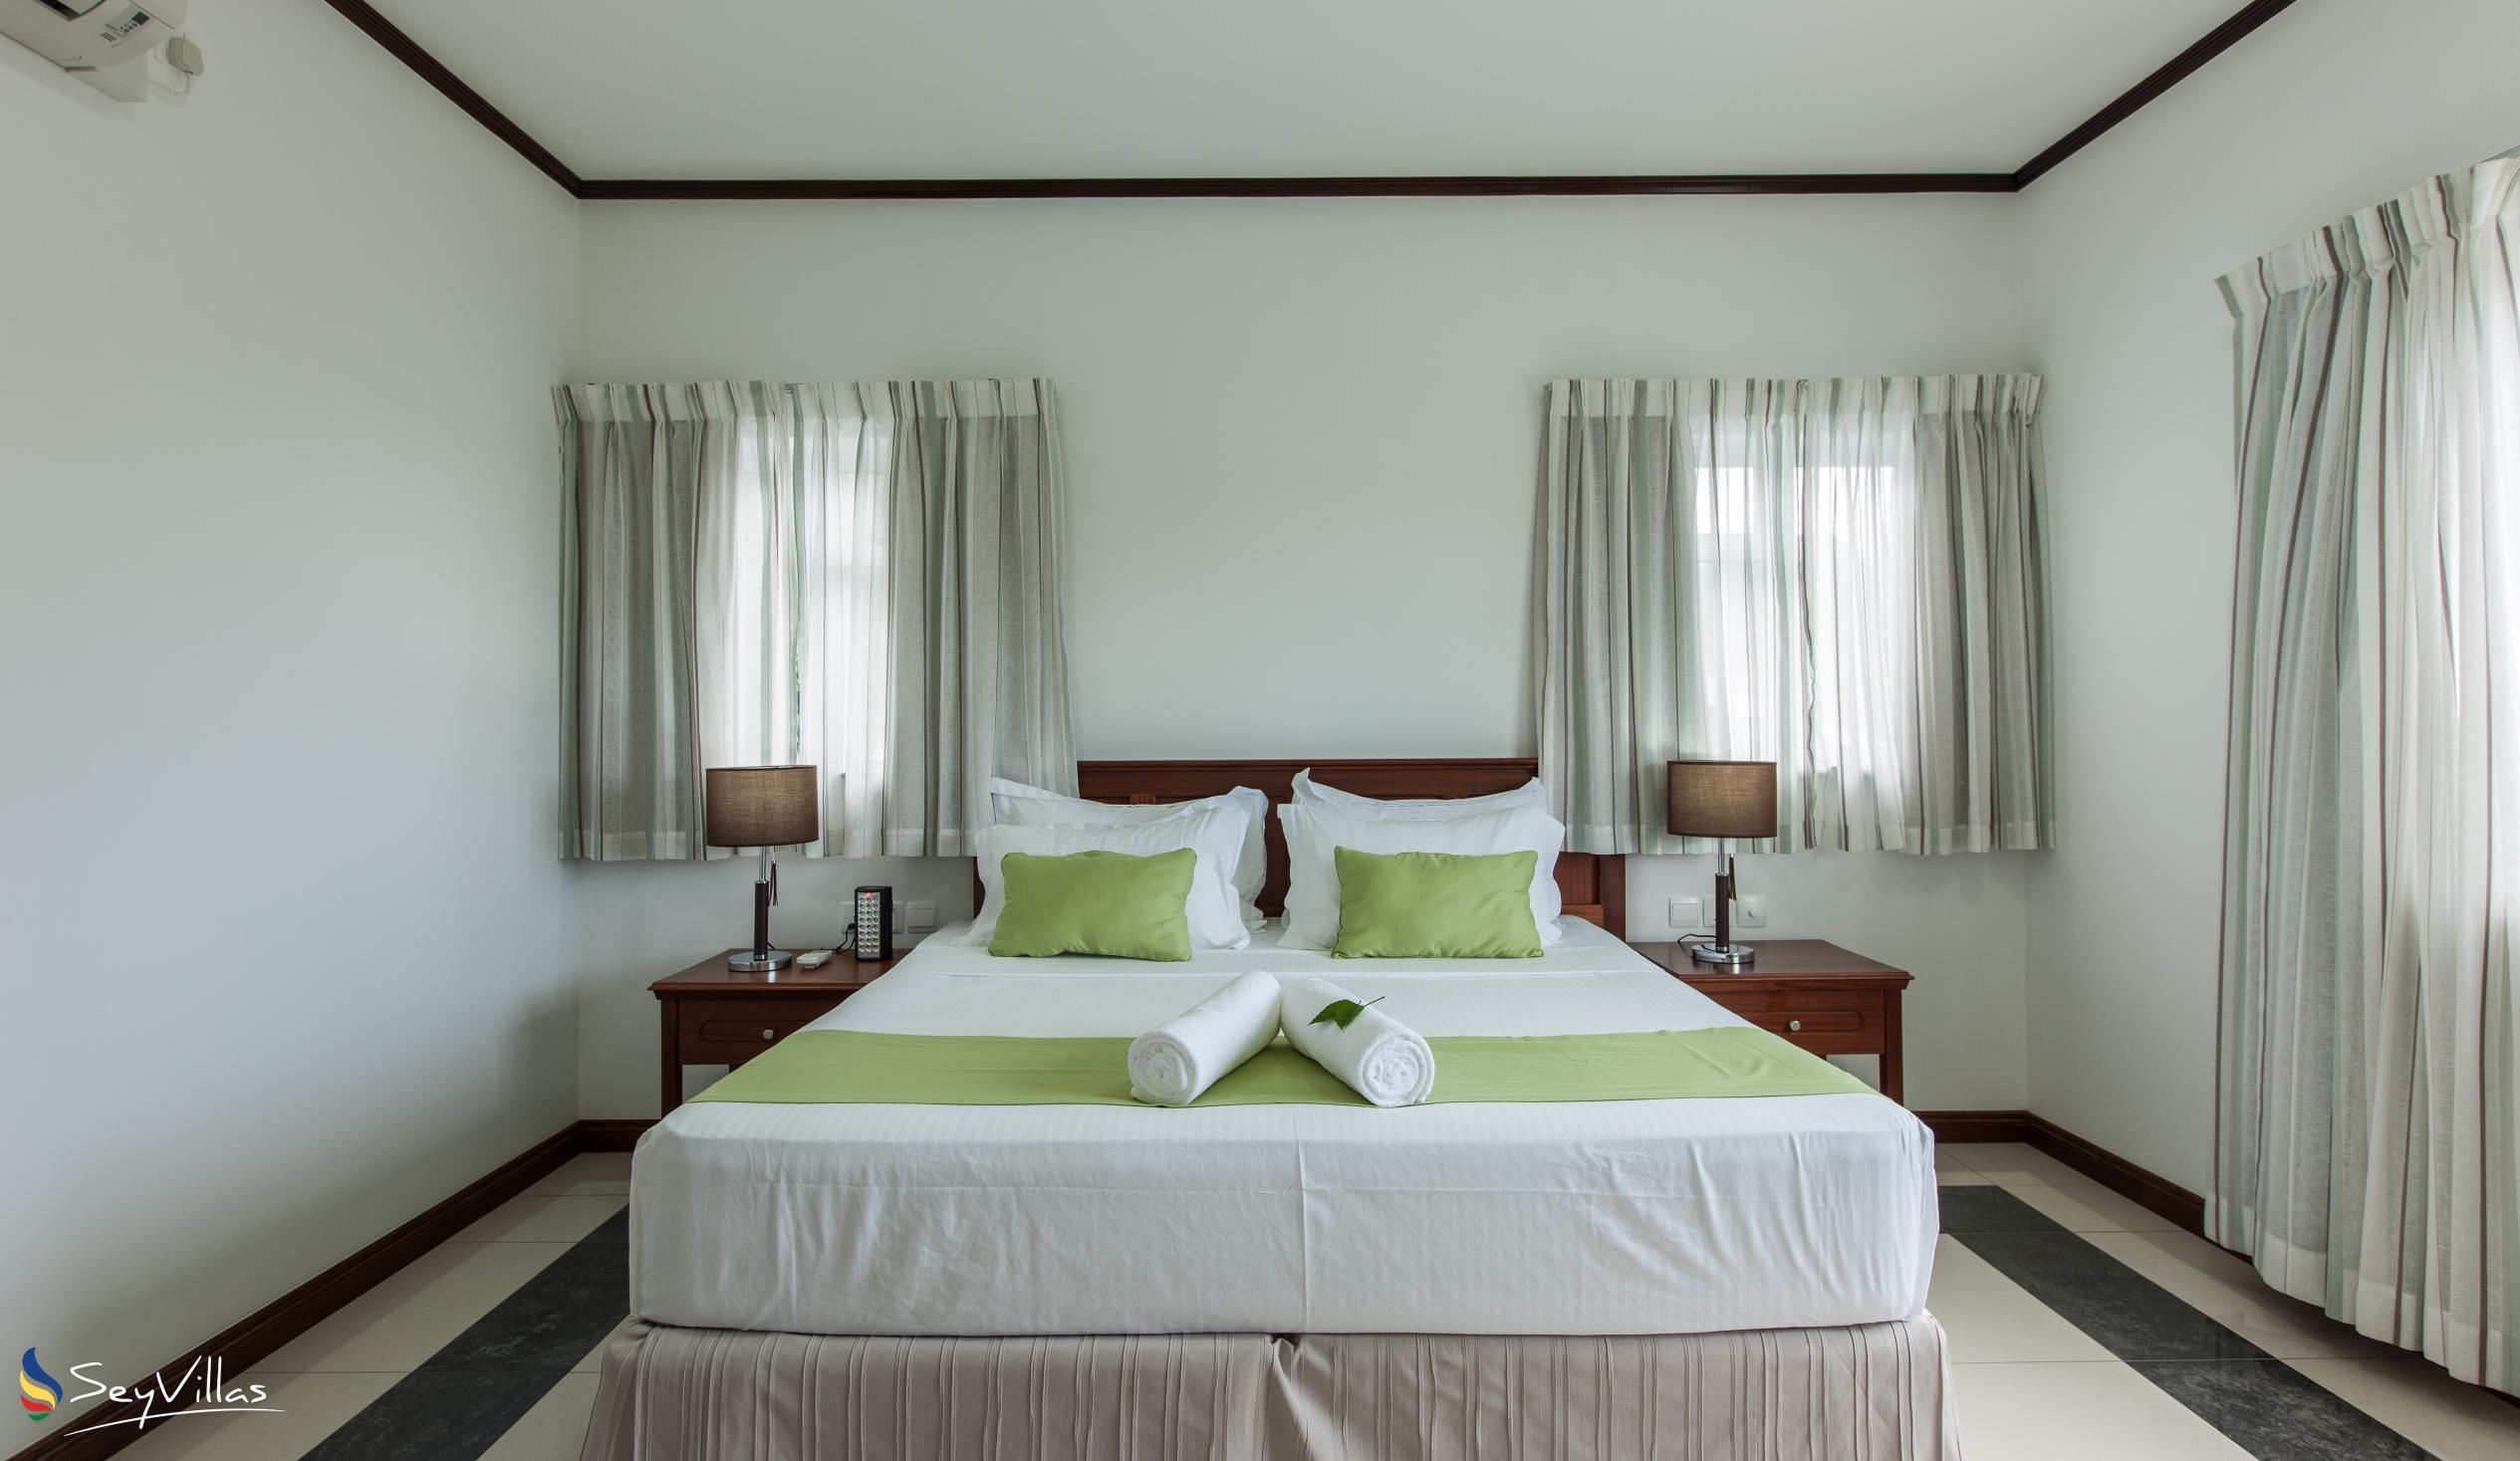 Photo 60: Bambous River Lodge - 2-Bedroom Apartment - Mahé (Seychelles)